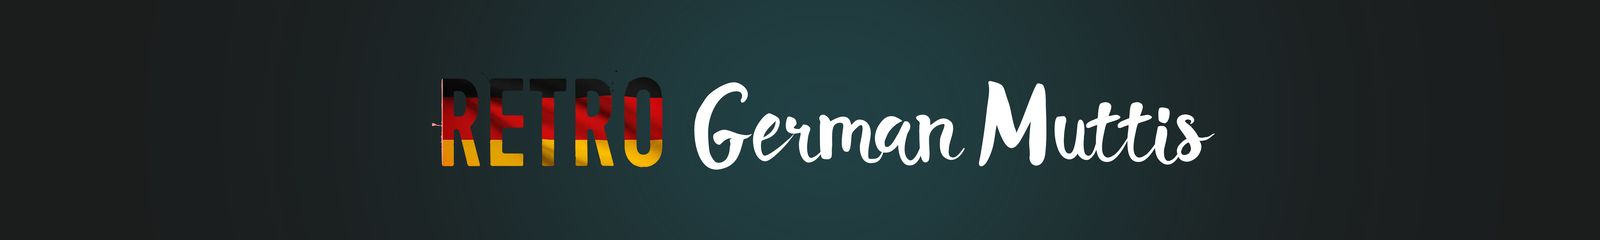 Retro German Muttis